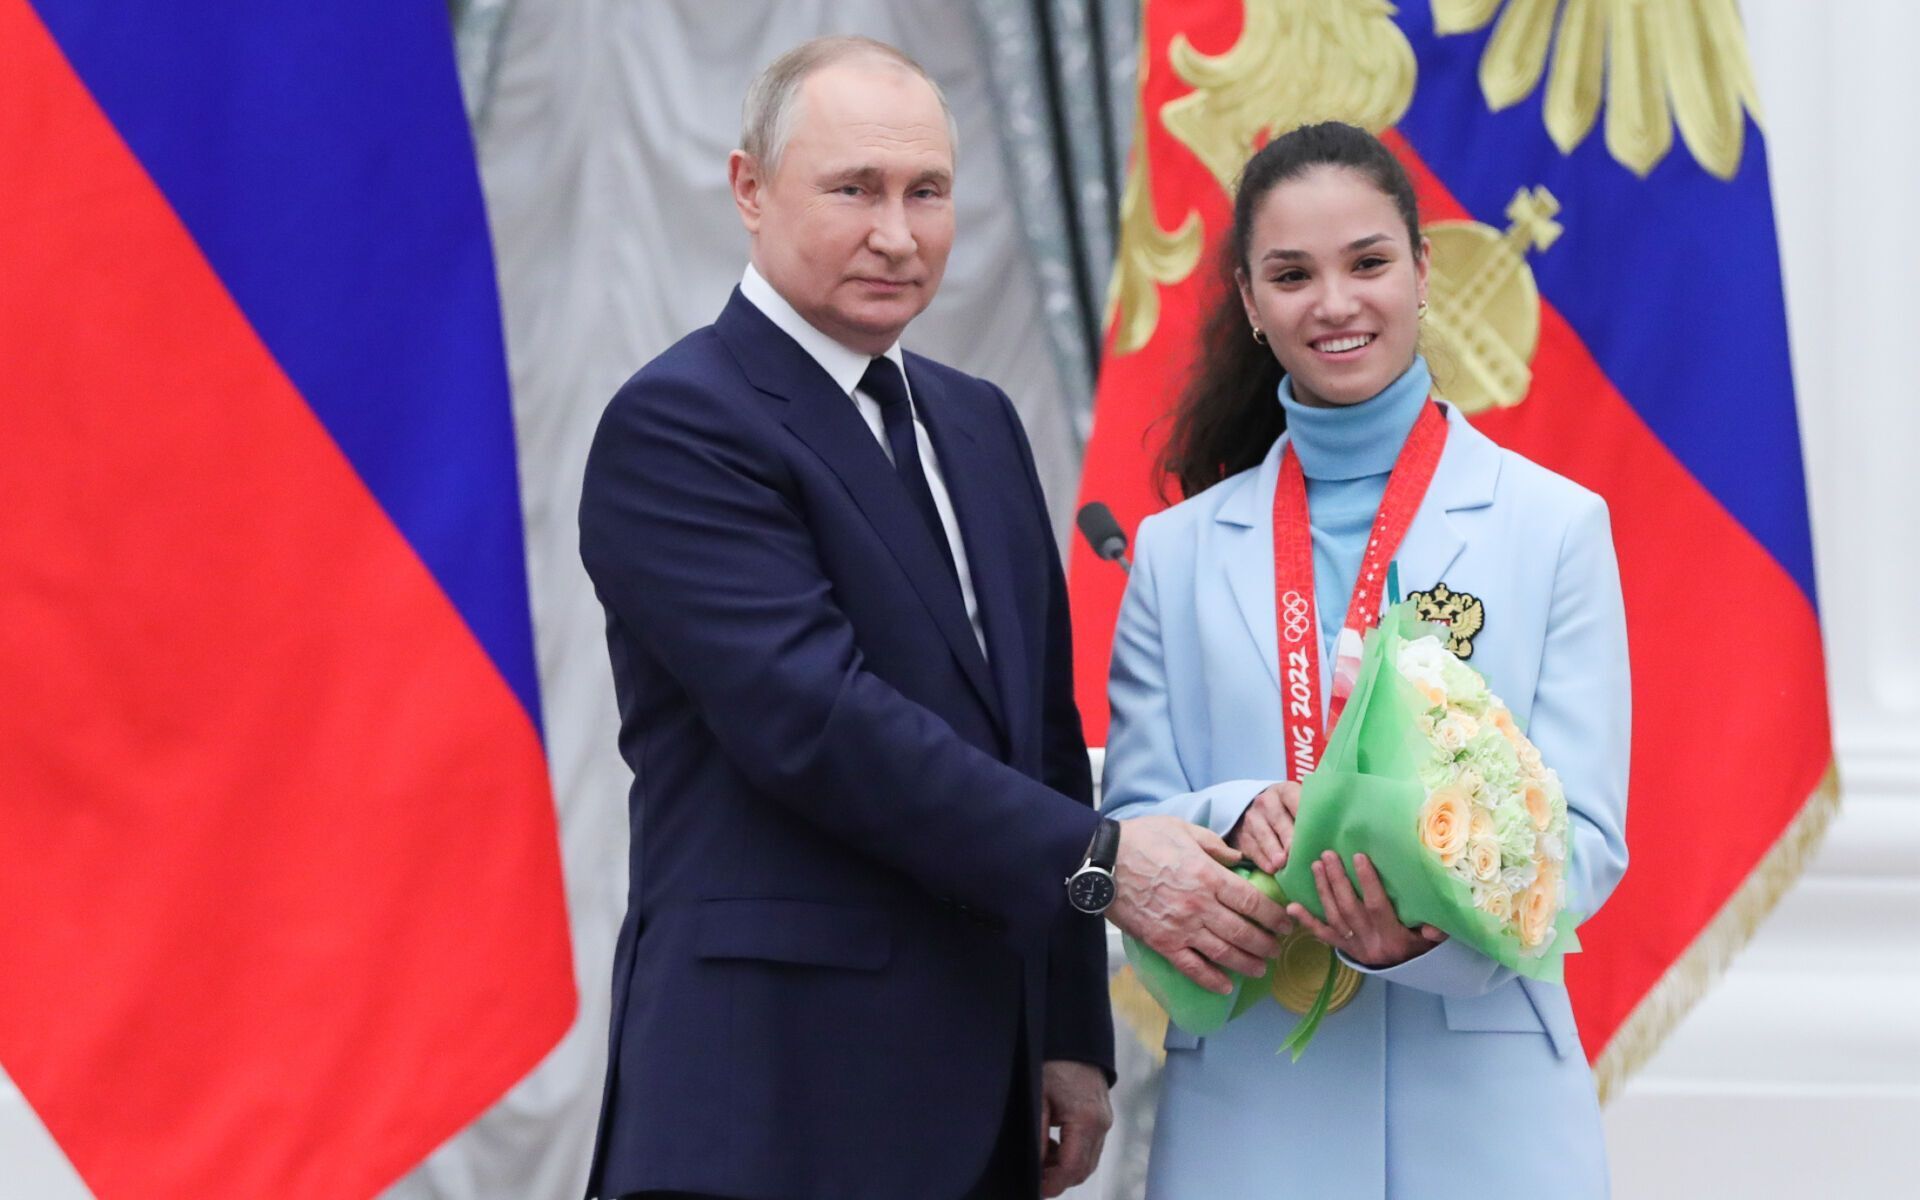 Putin and Stepanova